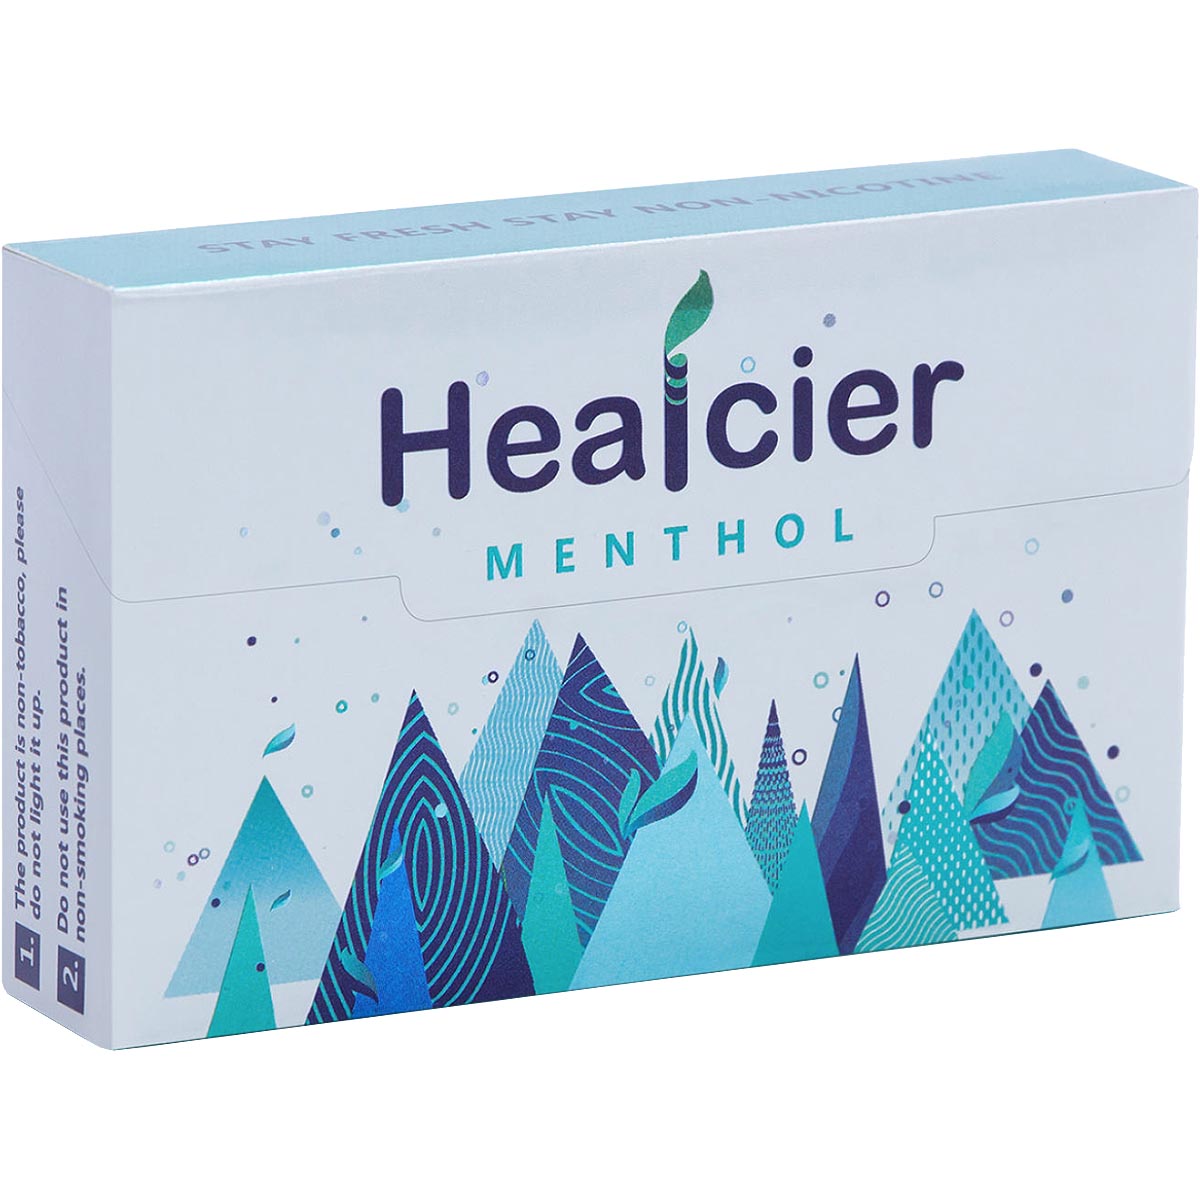 Healcier - Menthol Non-Nicotine